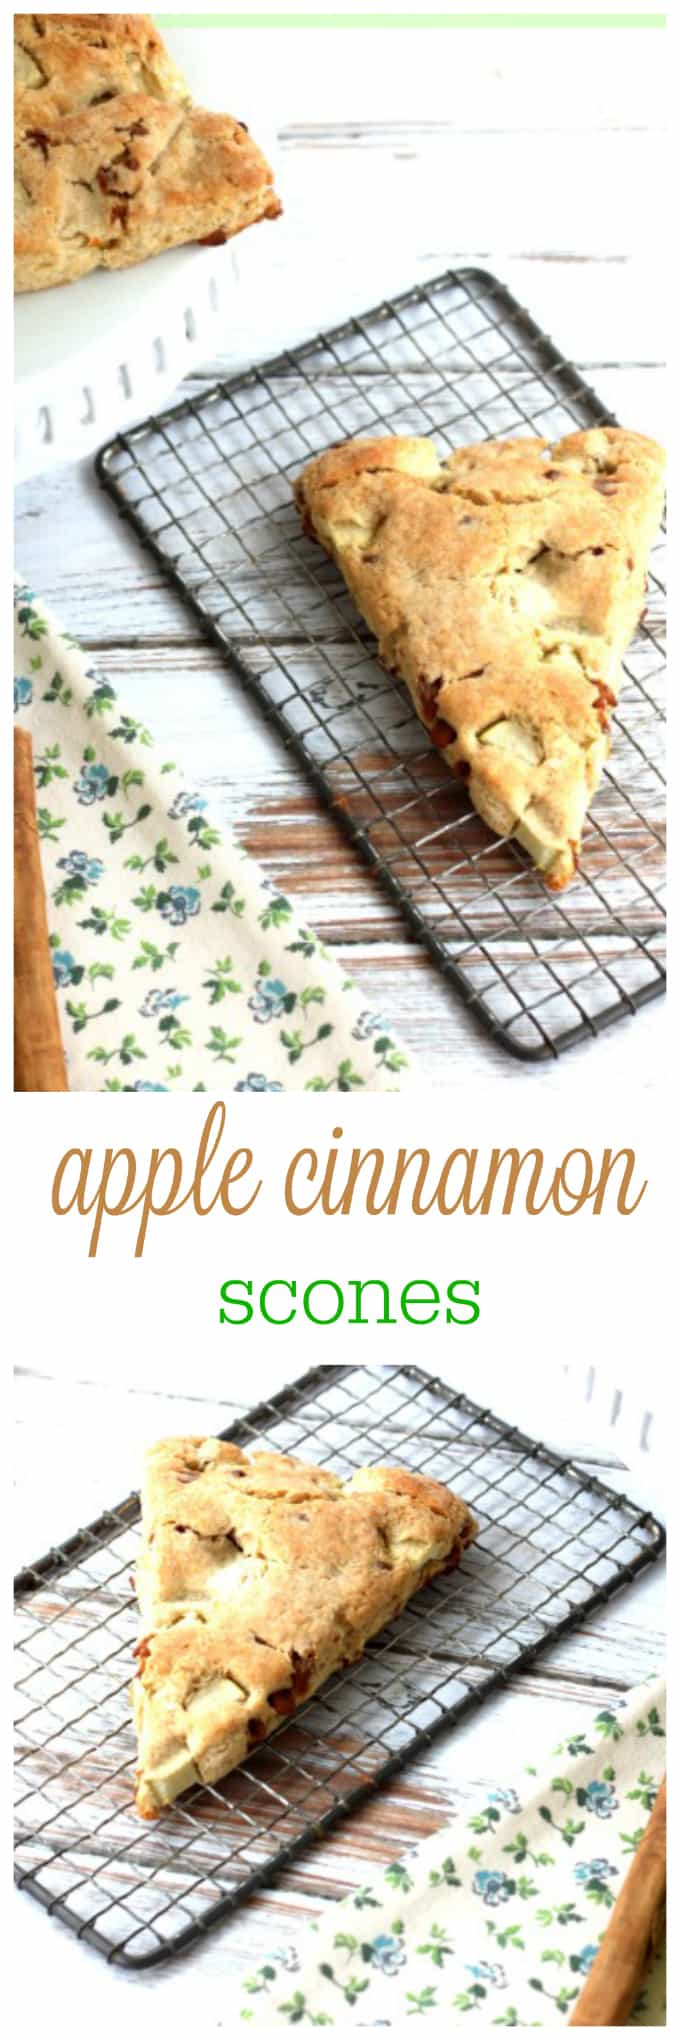 apple cinnamon scones @createdbydiane